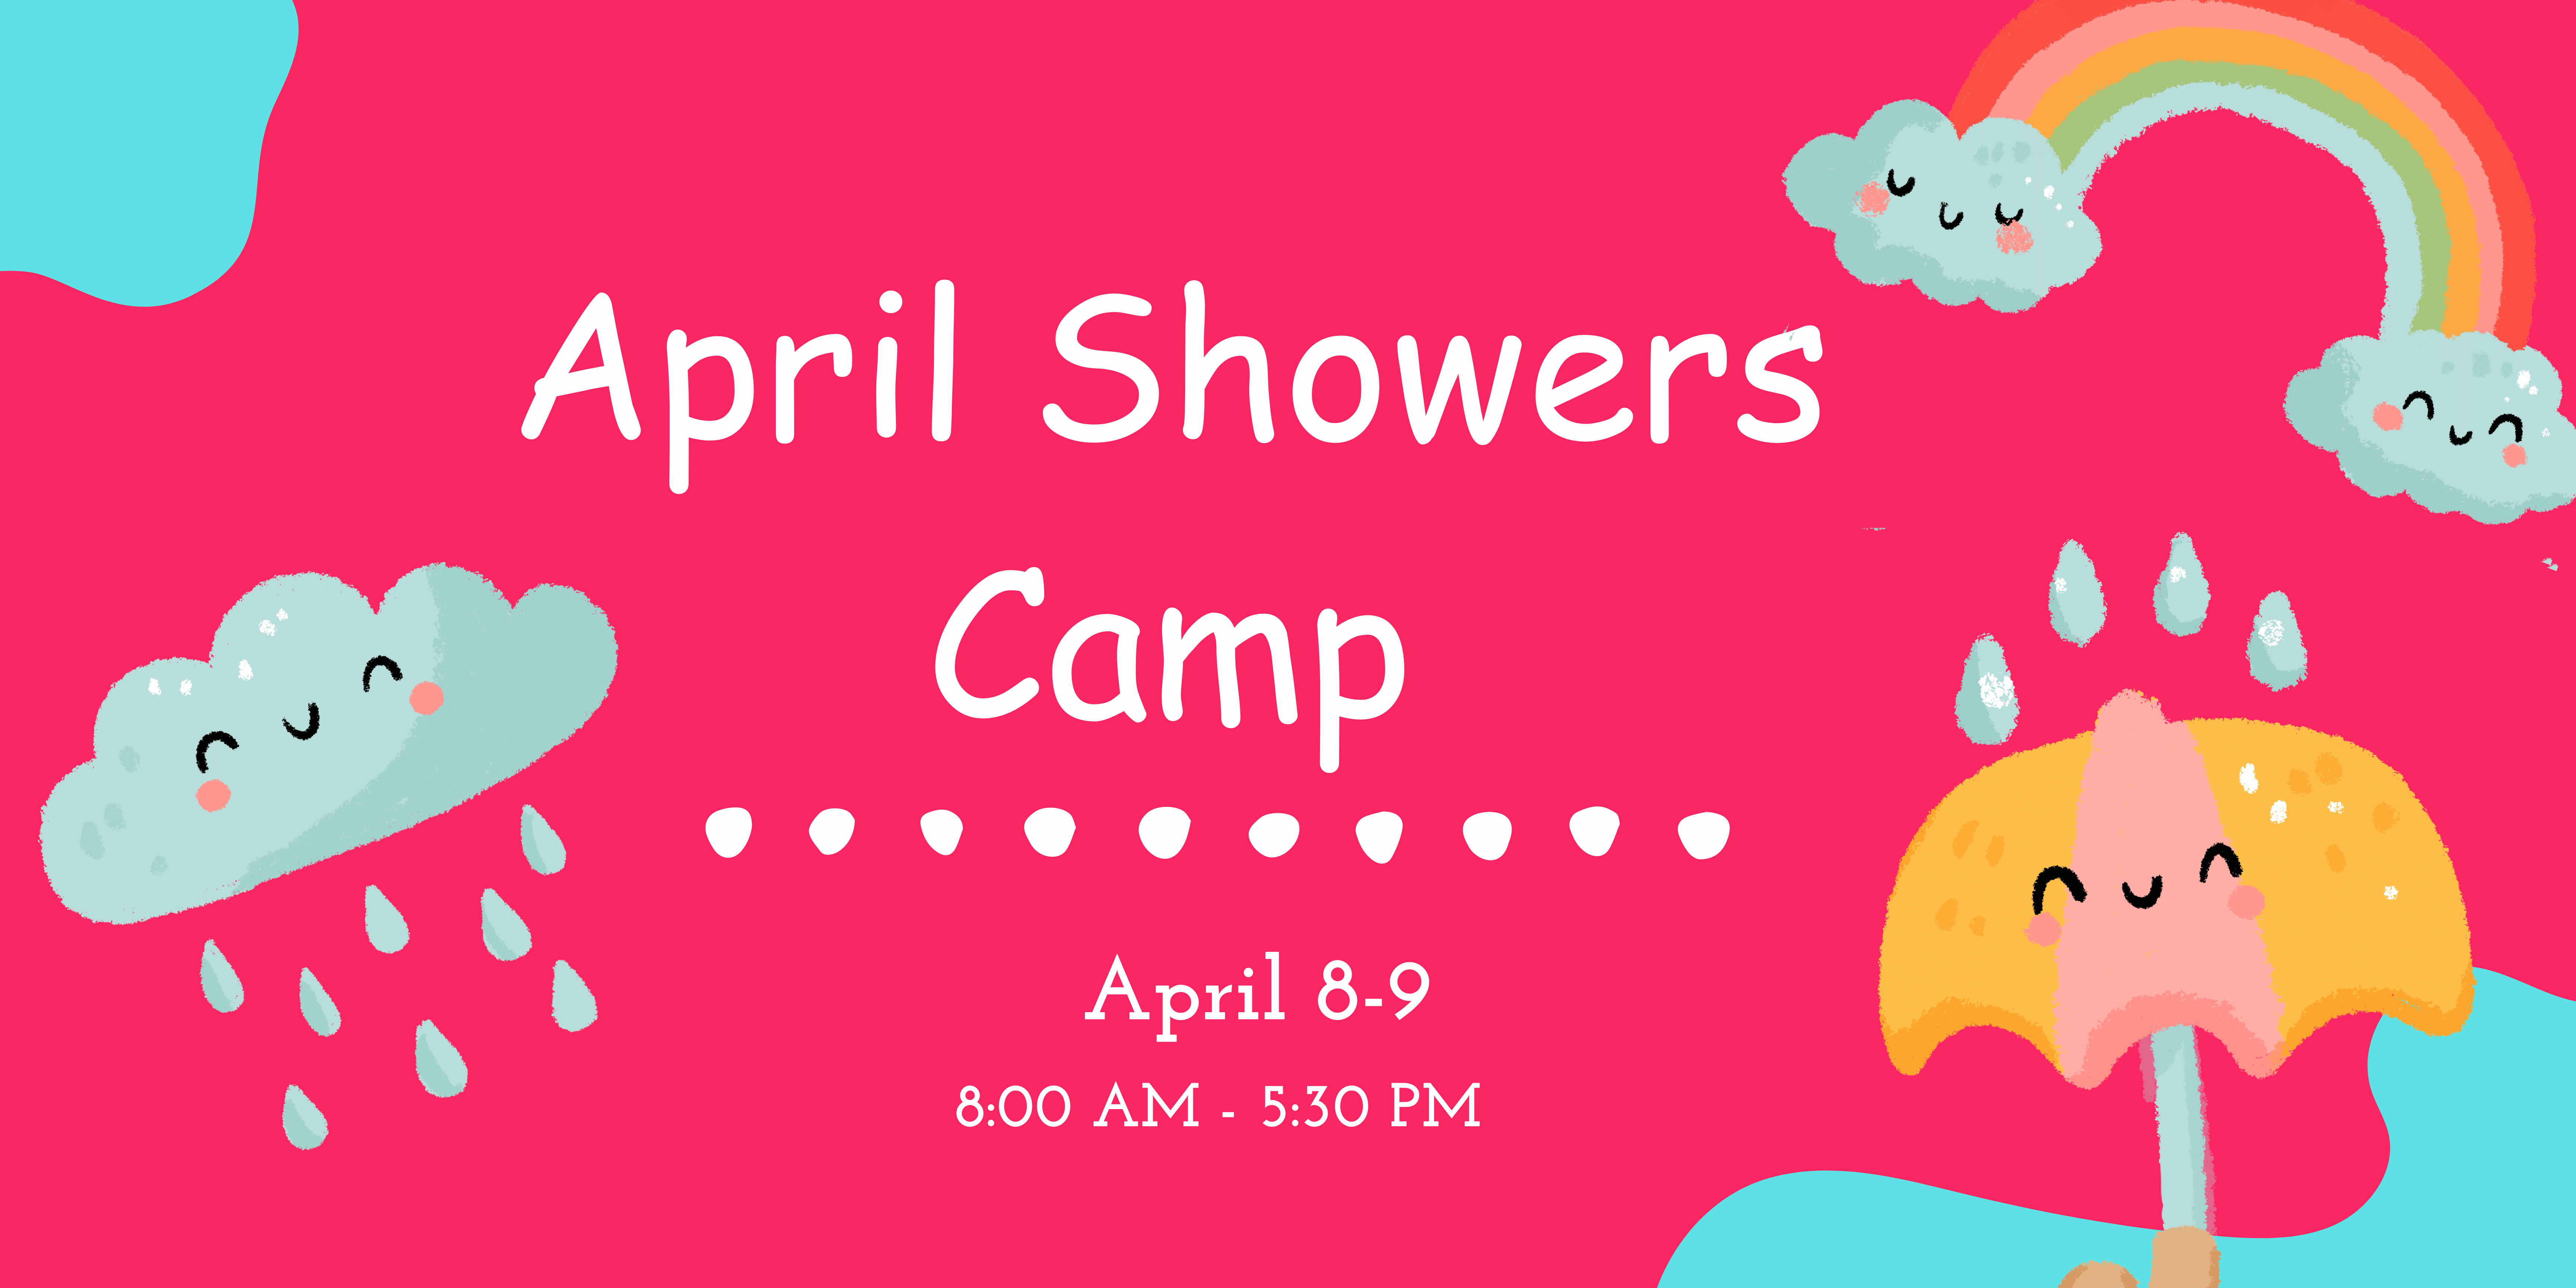 April Showers Camp - OMEGA GYMNASTICS CAMPS